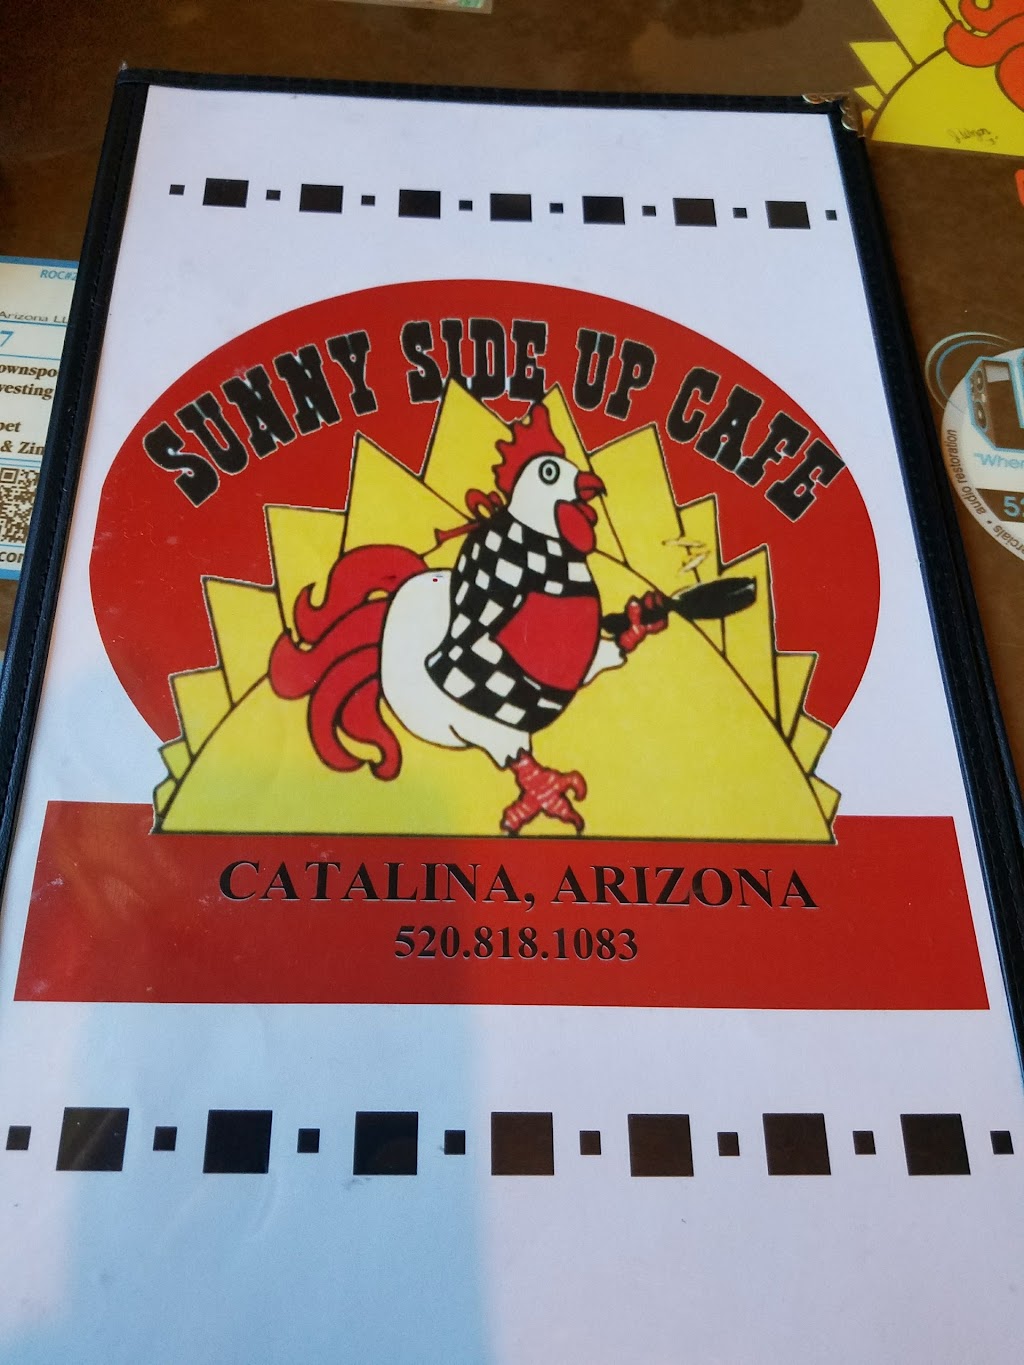 Sunny Side Up Cafe | 15800 N Oracle Rd, Tucson, AZ 85739 | Phone: (520) 818-1083